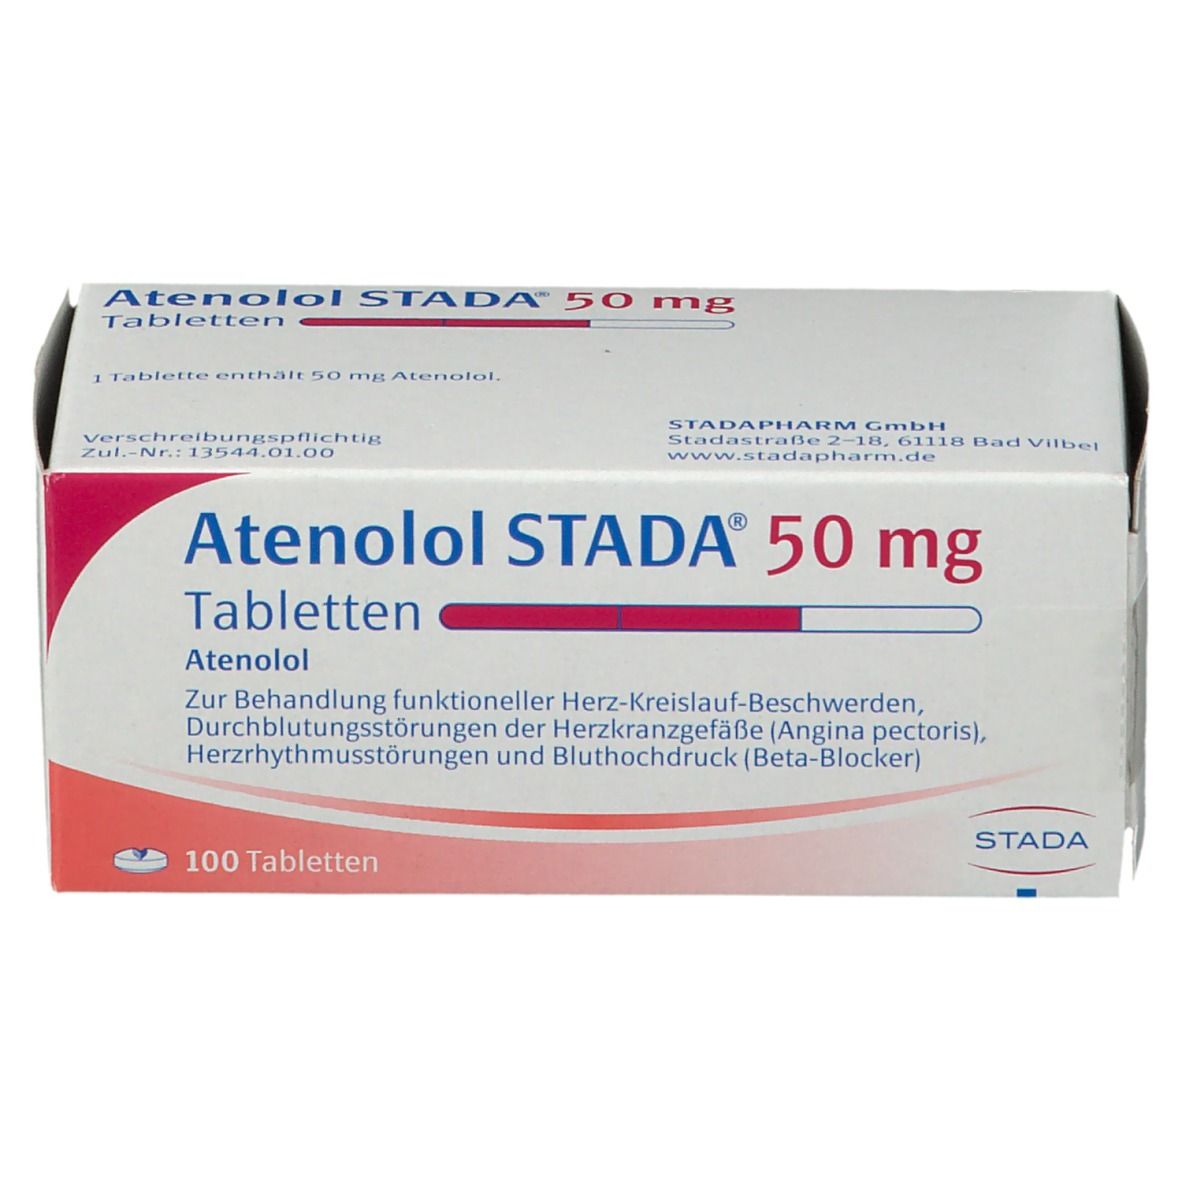 Atenolol STADA® 50 mg